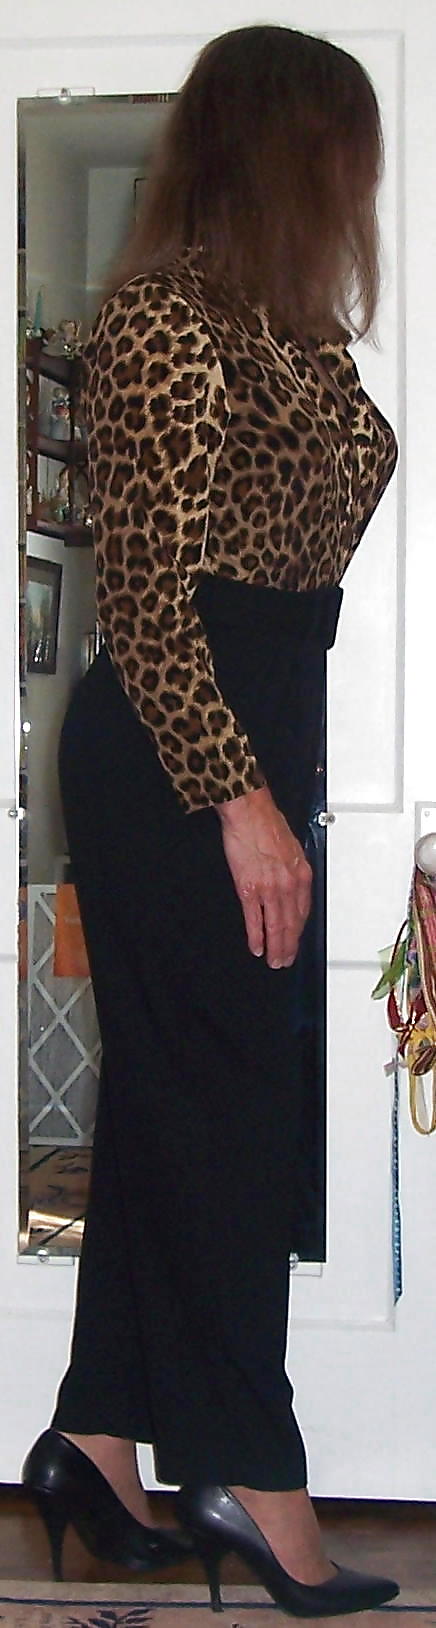 Crossdressing - ragazza leopardo
 #7202750